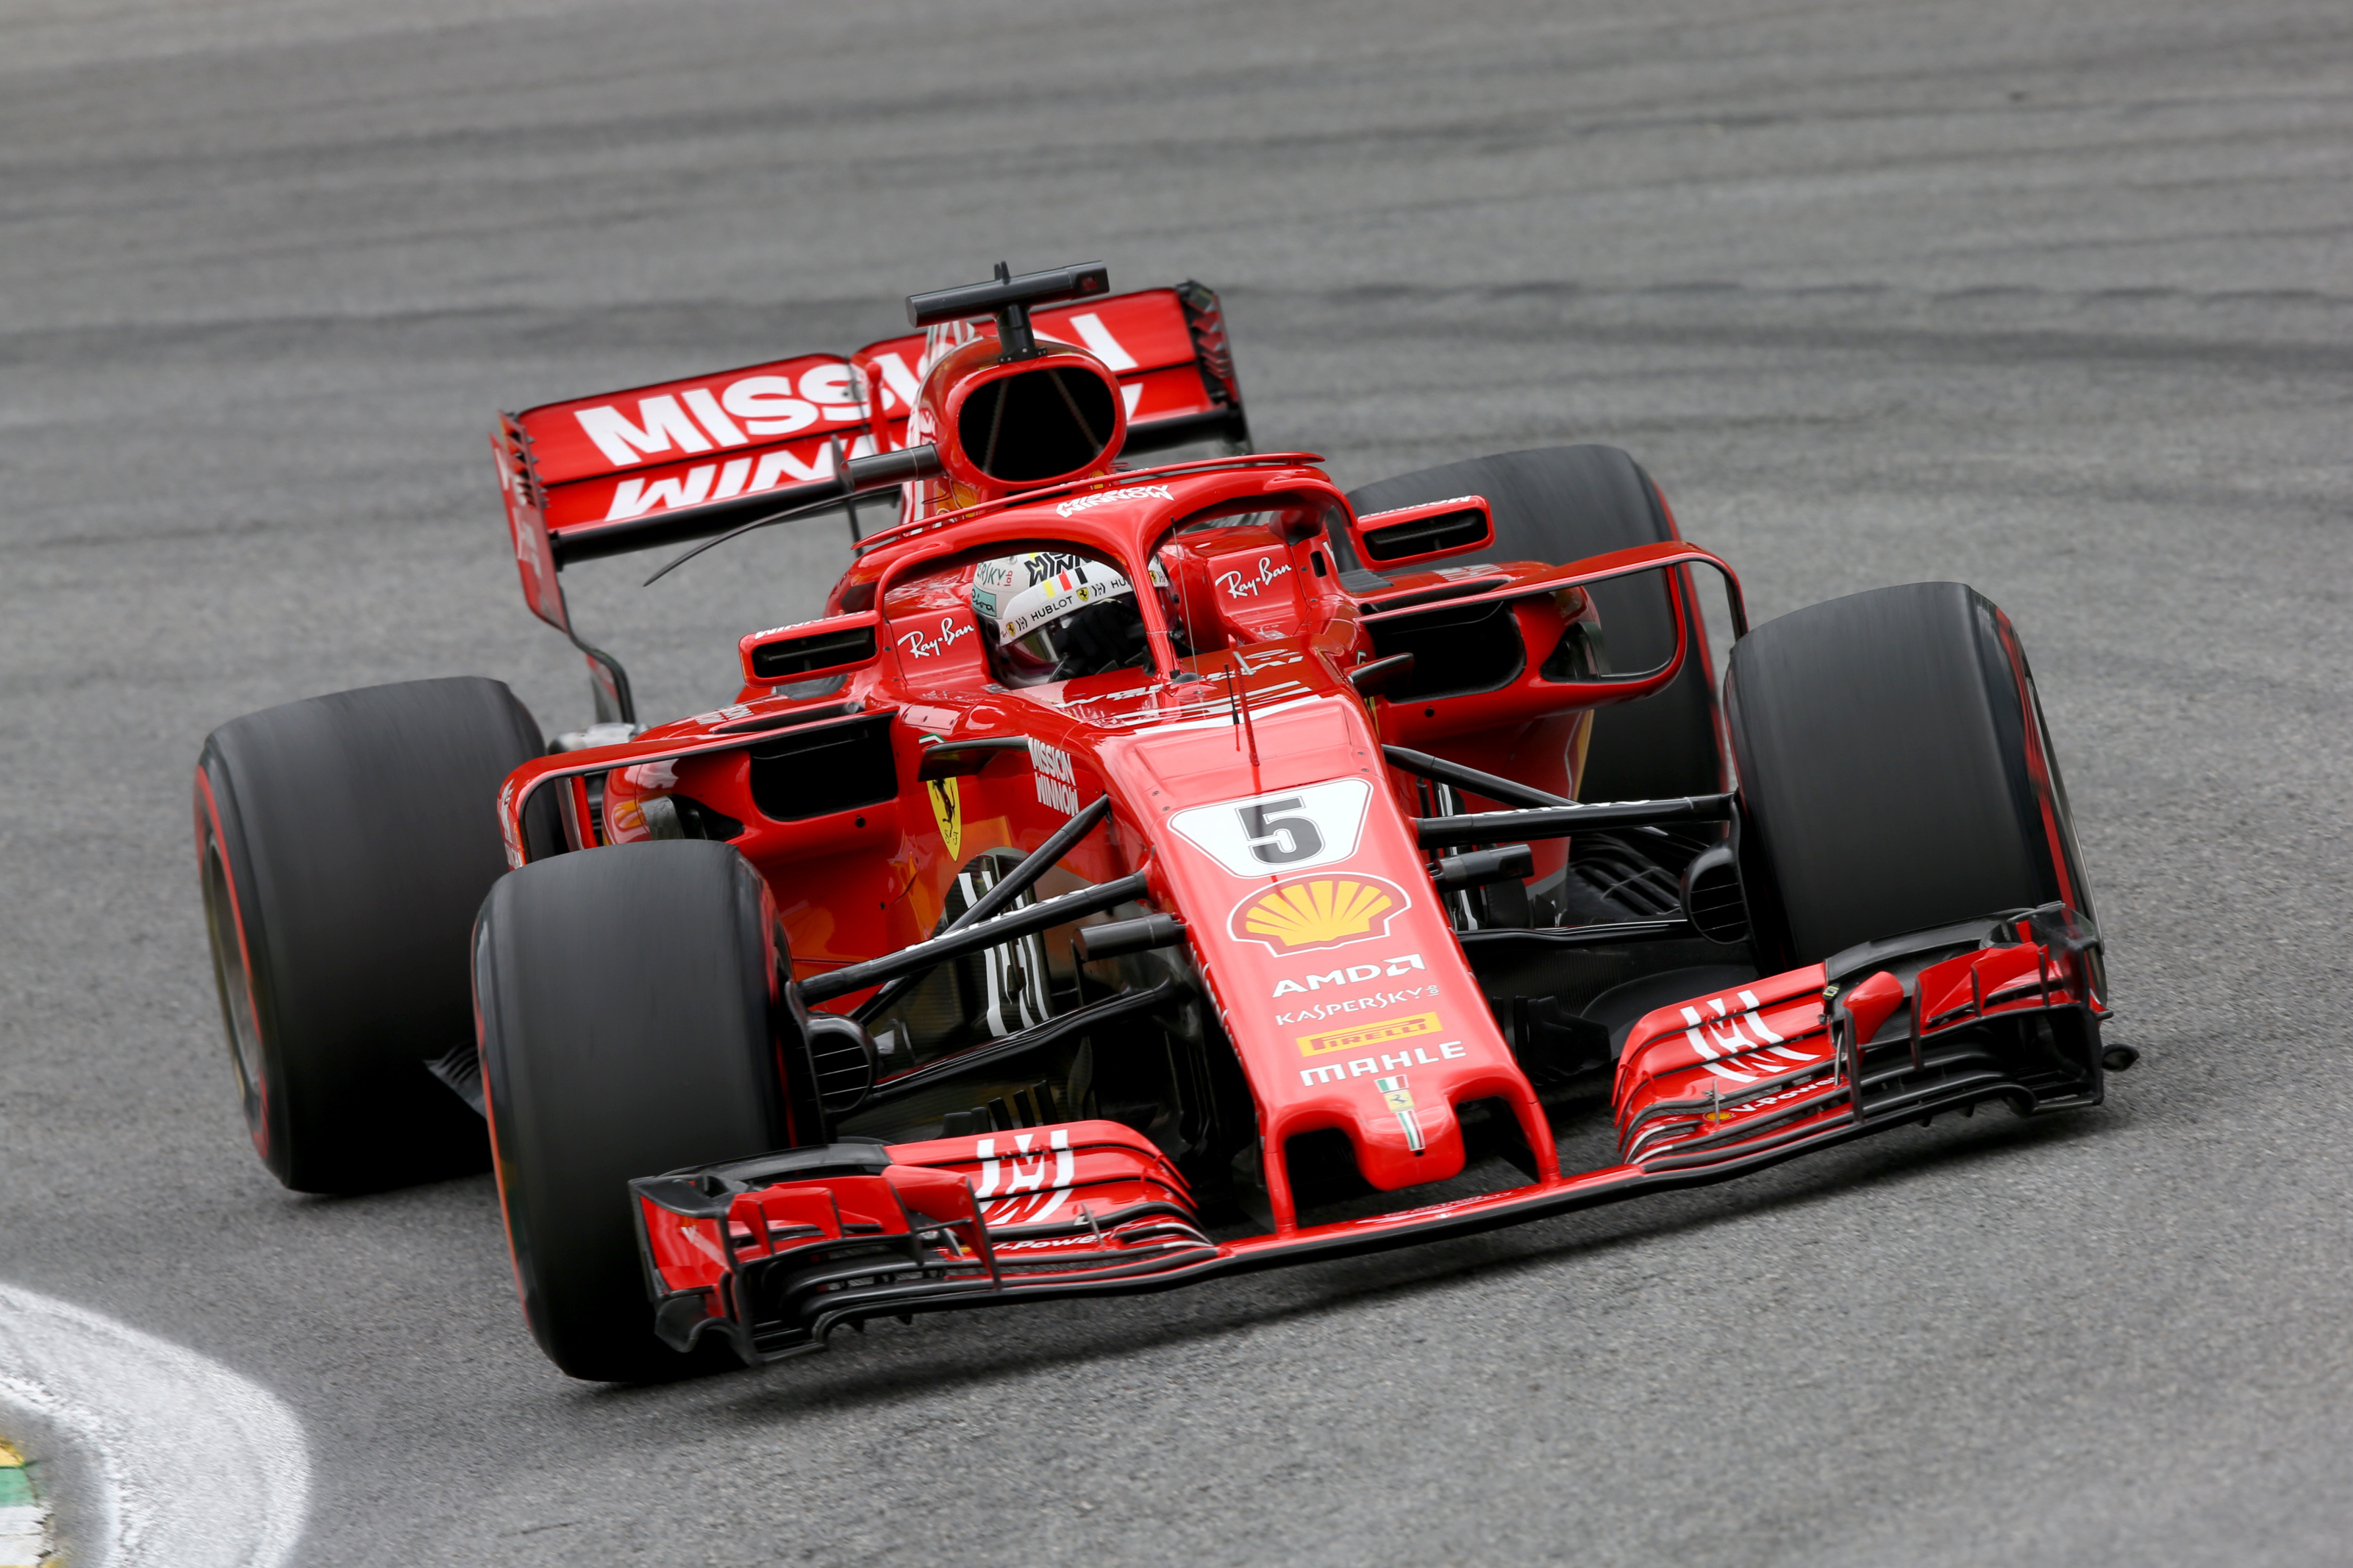 The Ferrari F1 2018 SF71H driven by Vettel once again won the